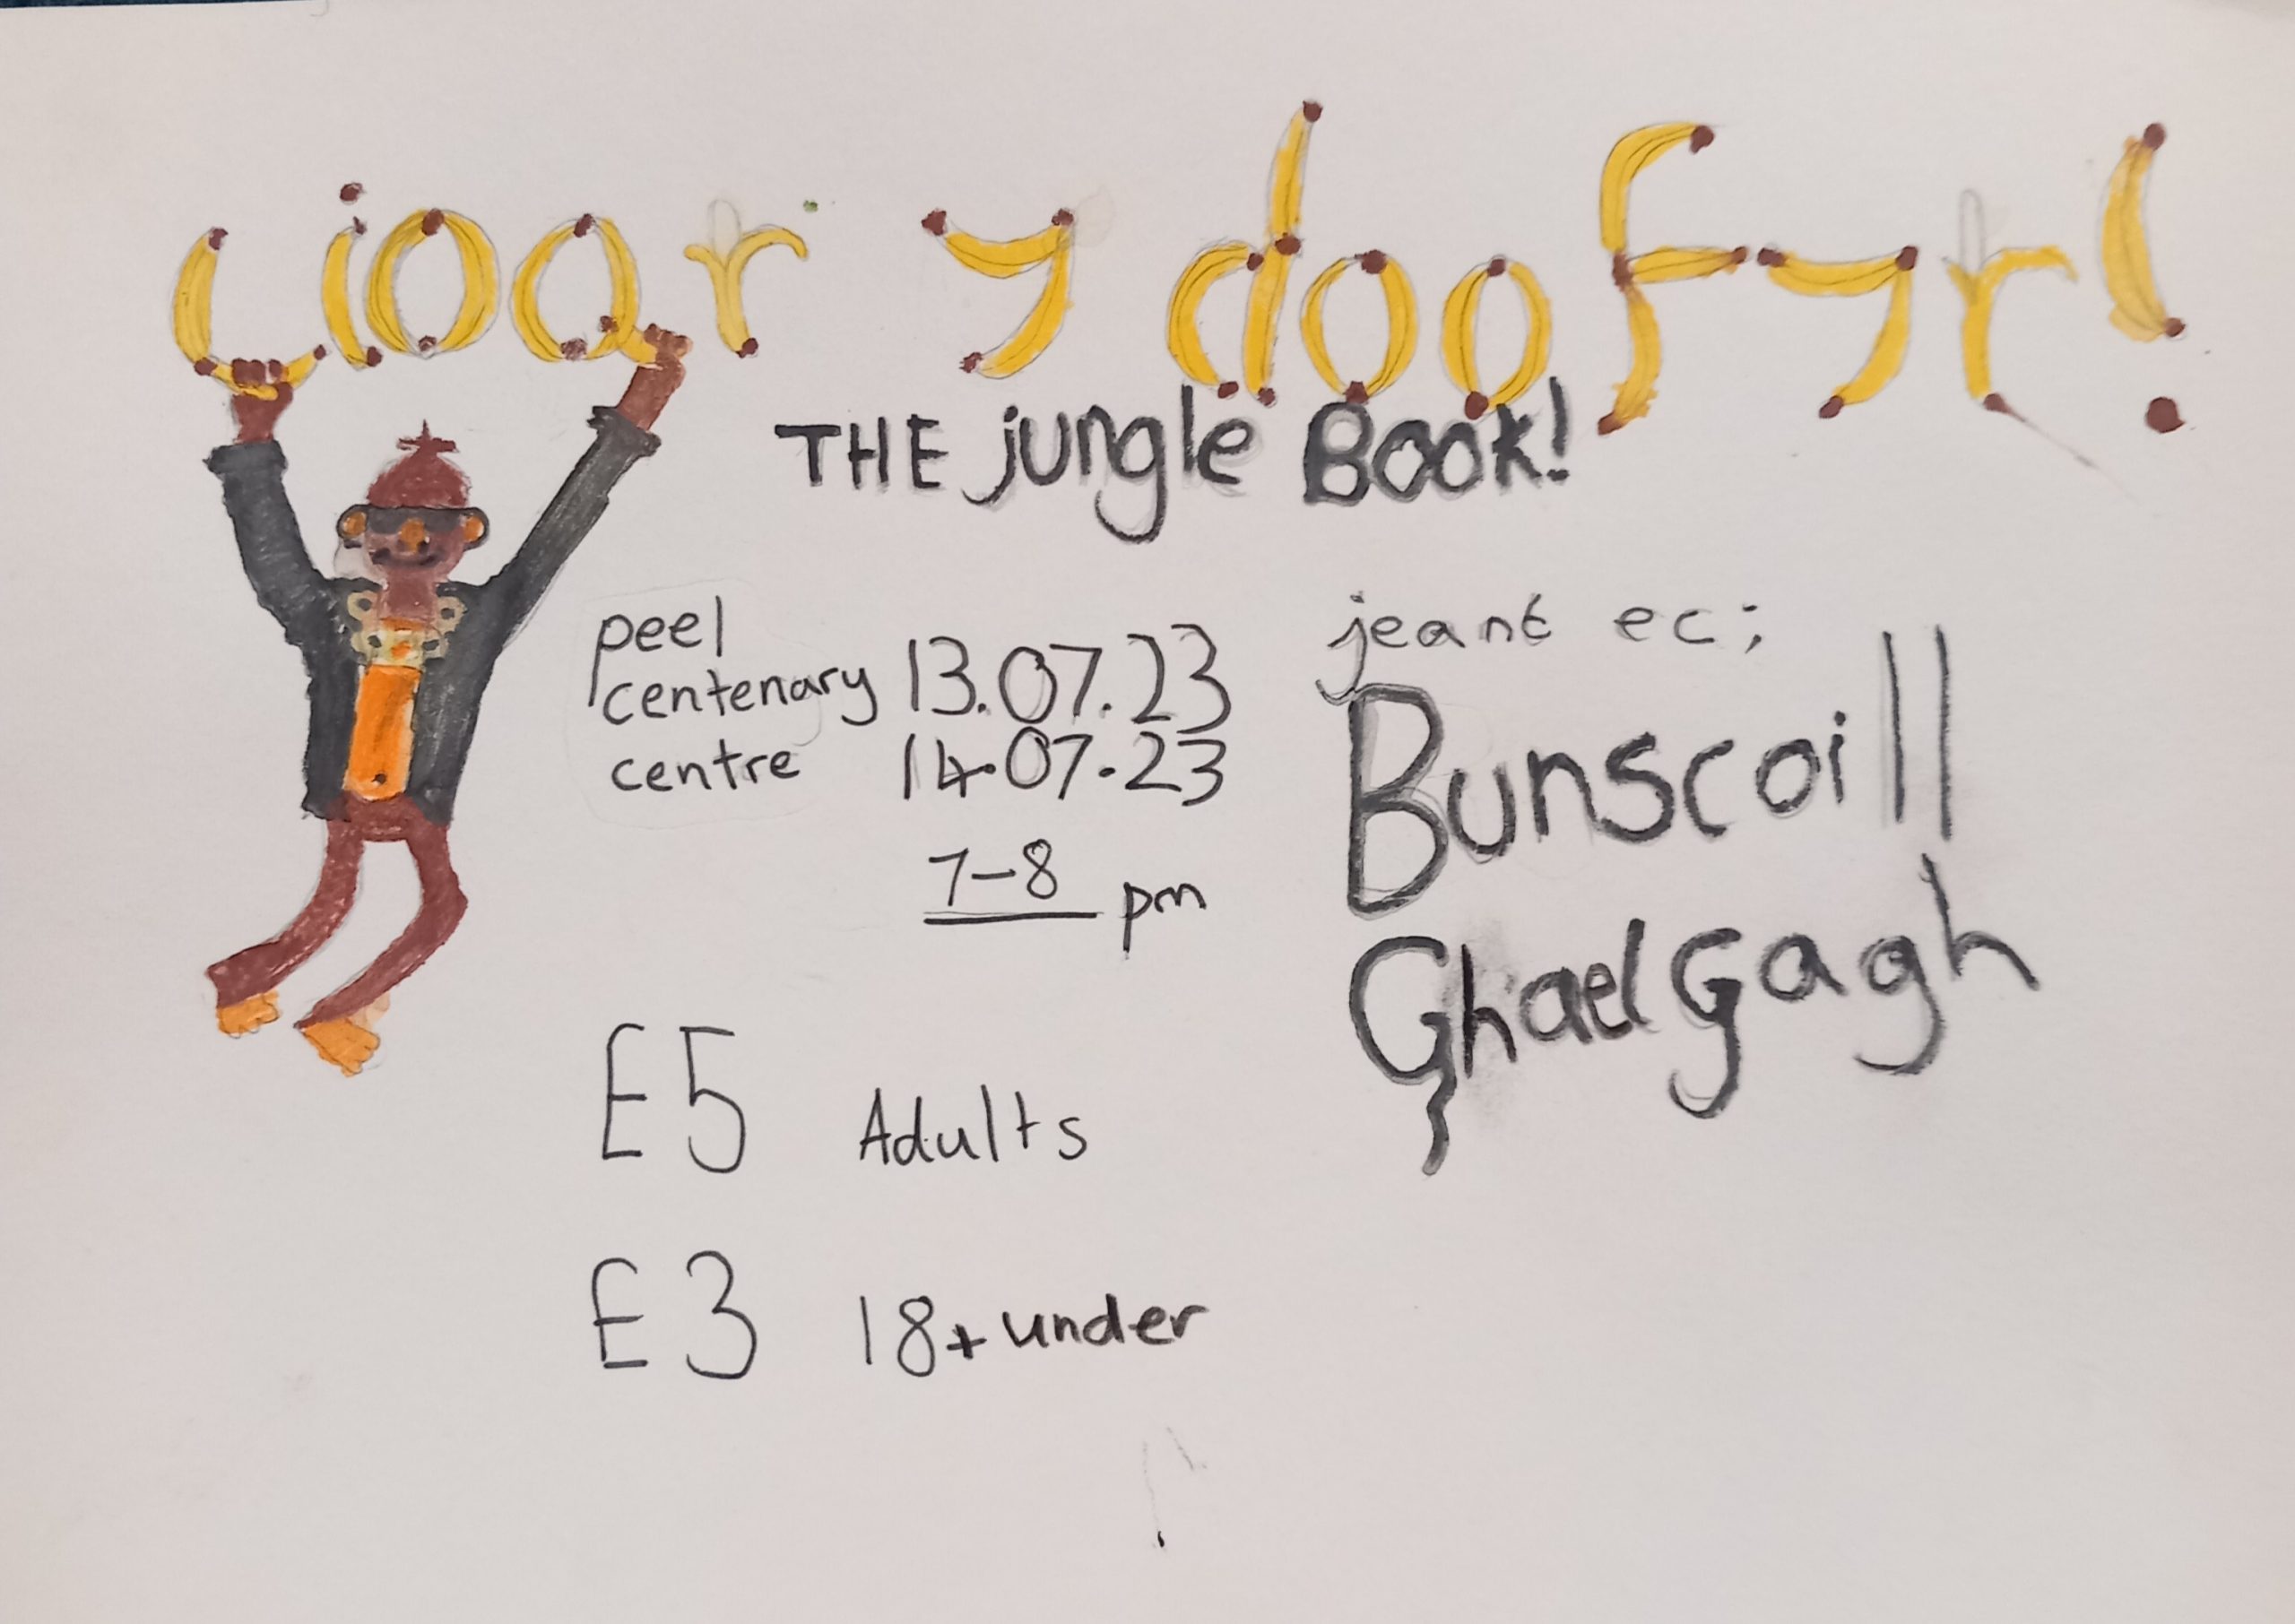 The Jungle Book by Bunscoill Ghaelgagh